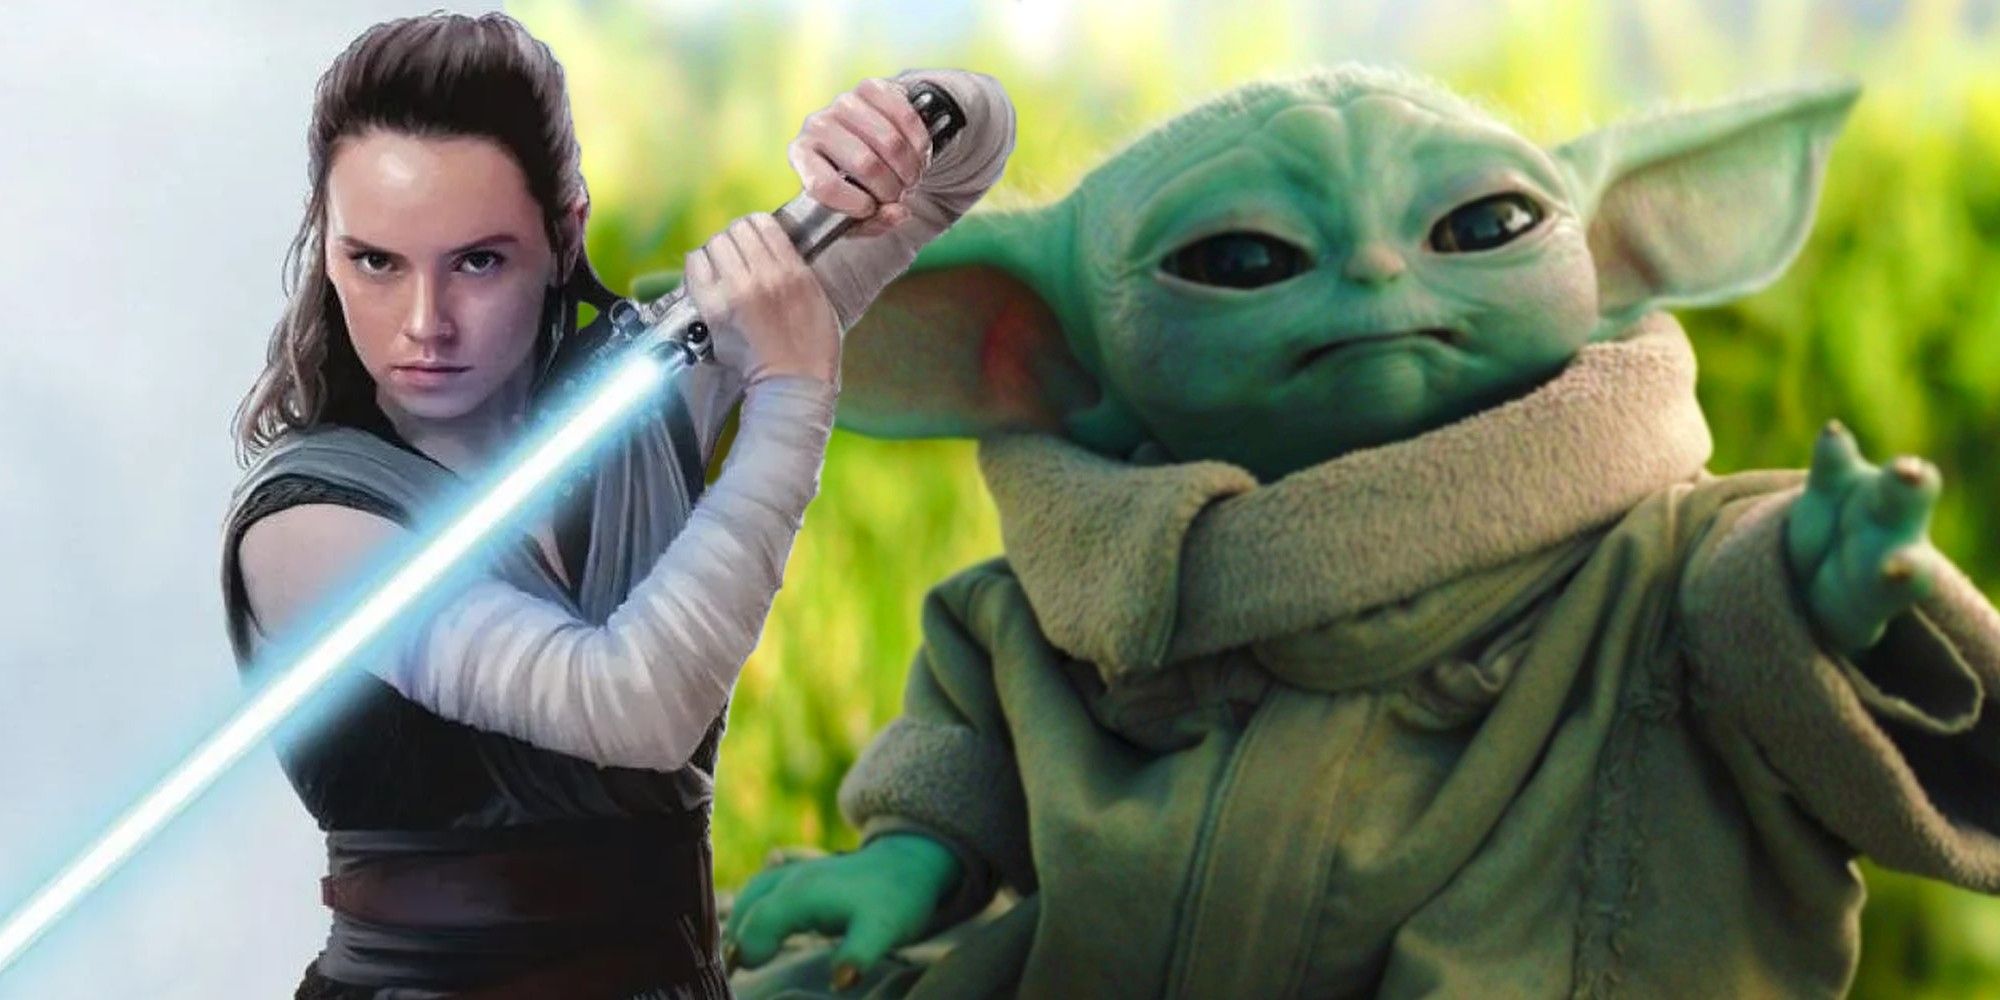 Star Wars 10 Theory: The Next Trilogy Follows Grogu's Jedi Order